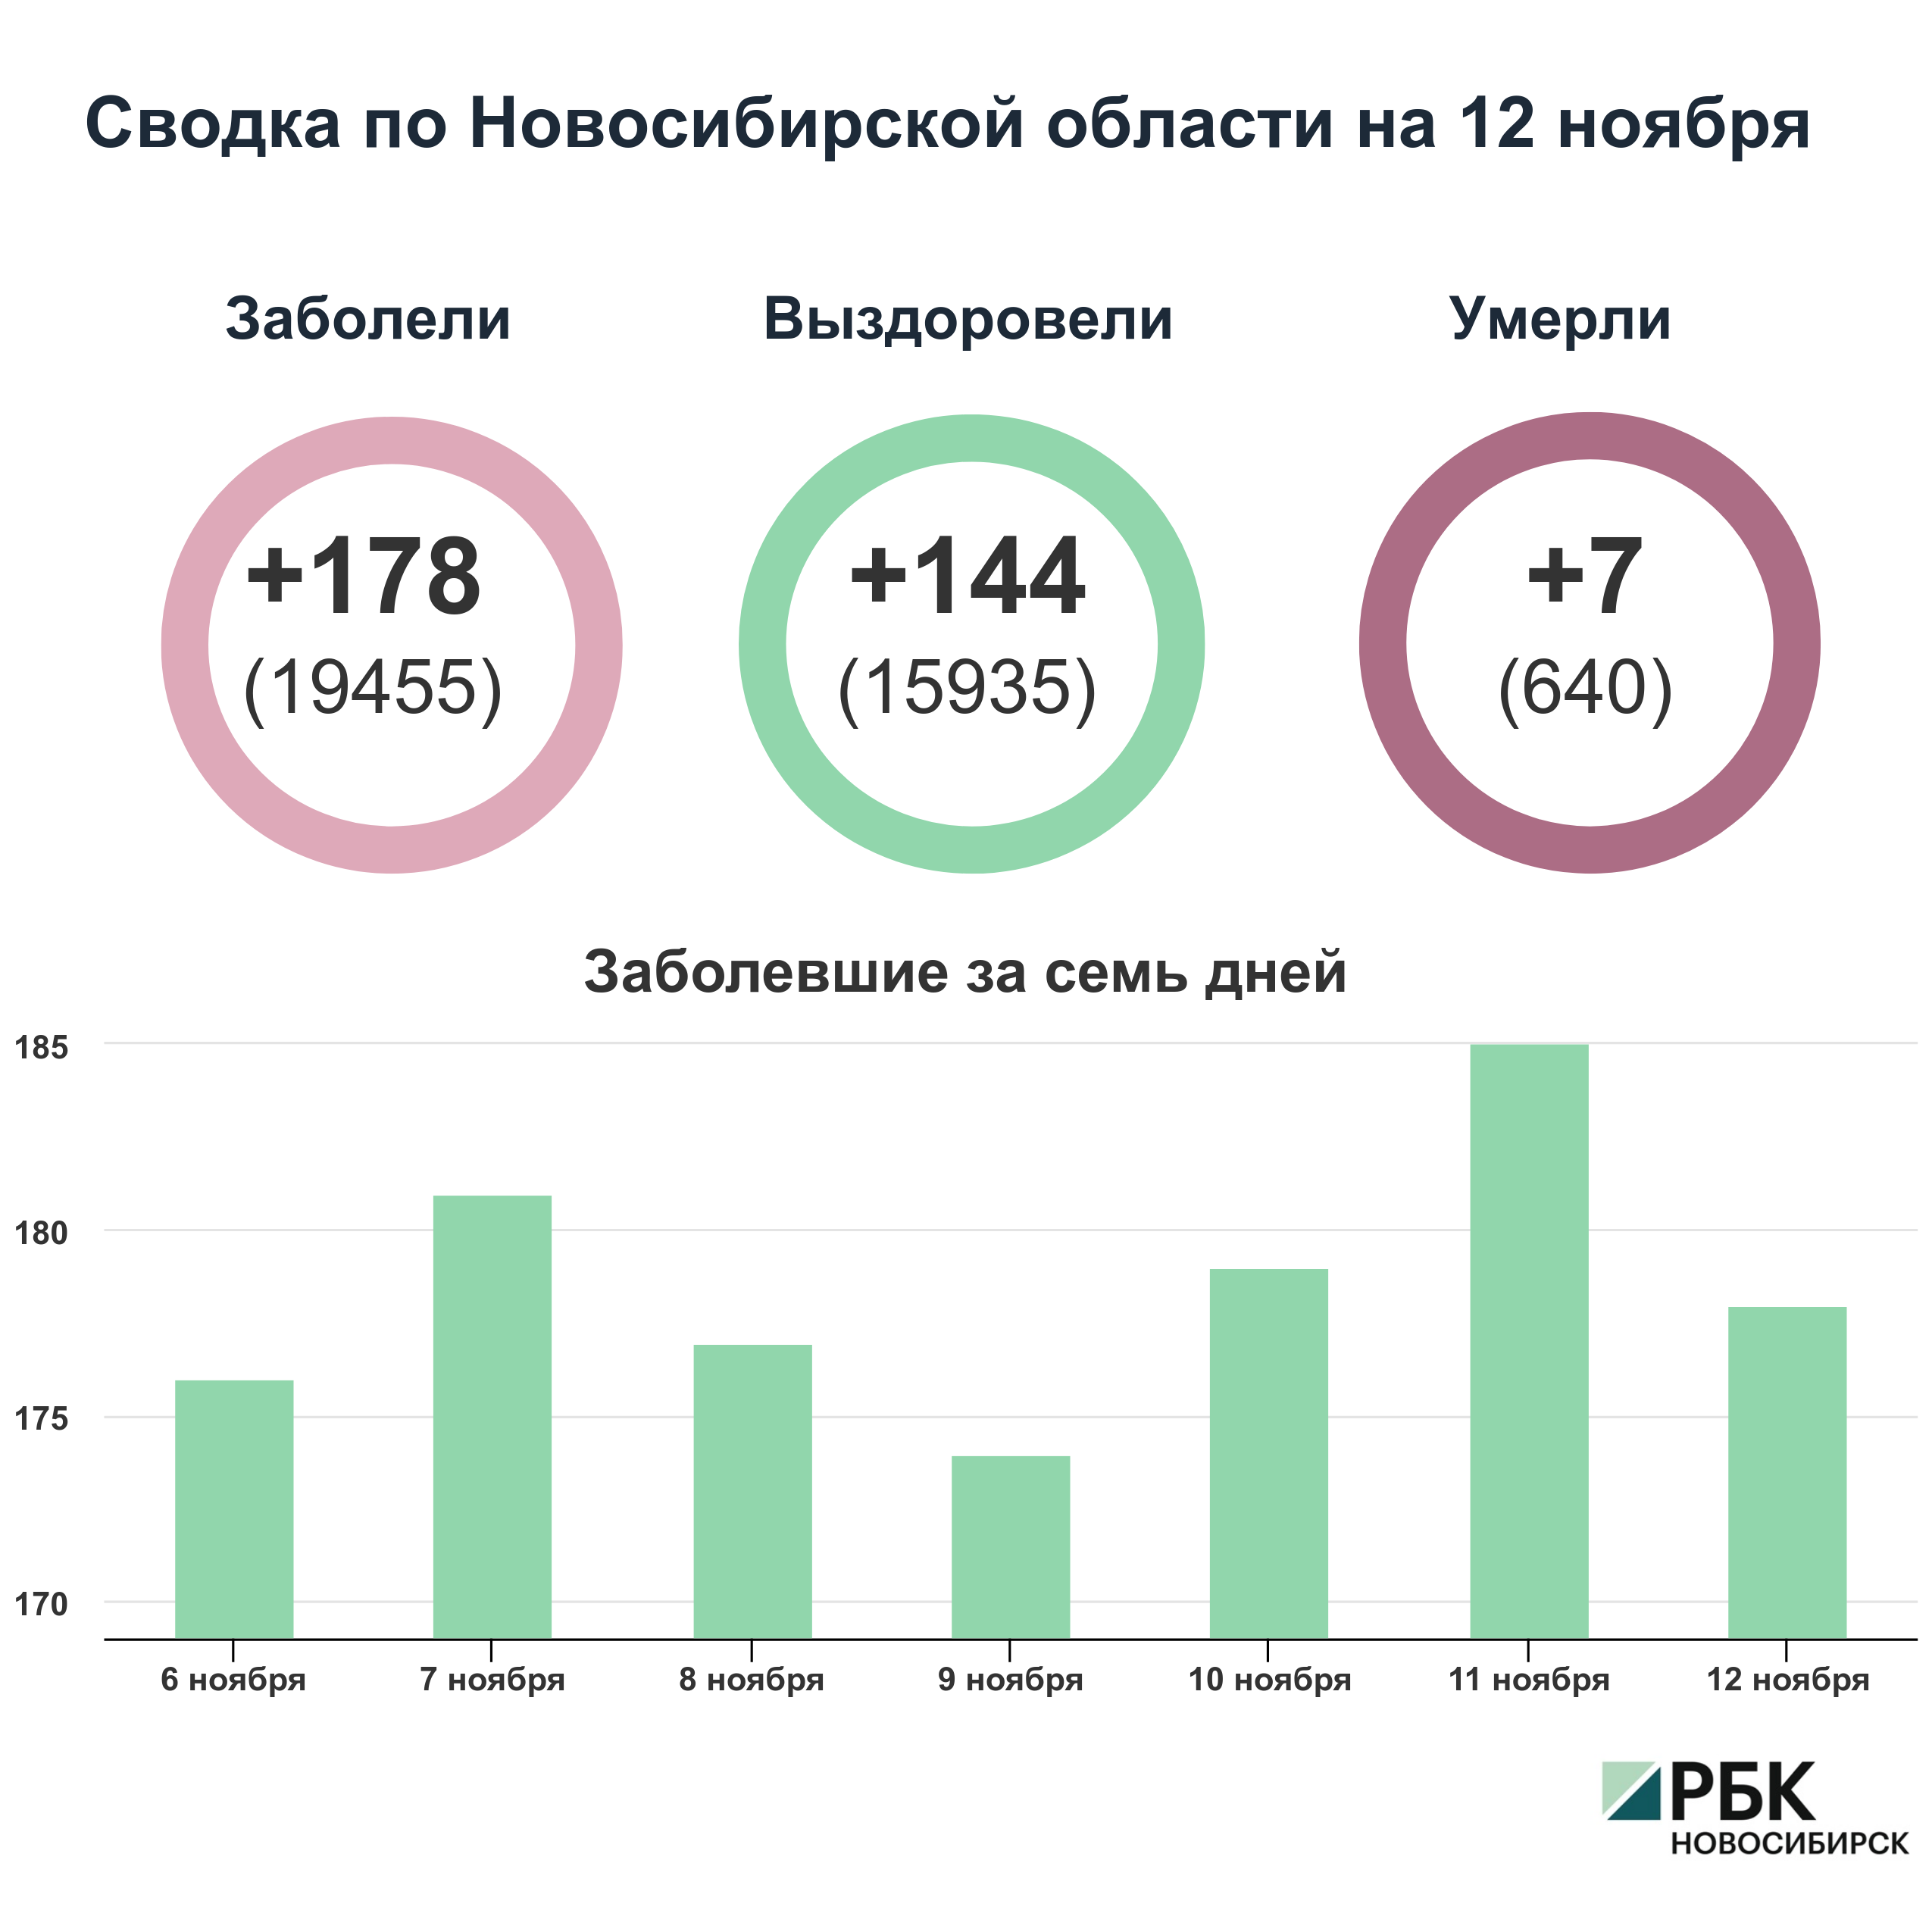 Коронавирус в Новосибирске: сводка на 12 ноября